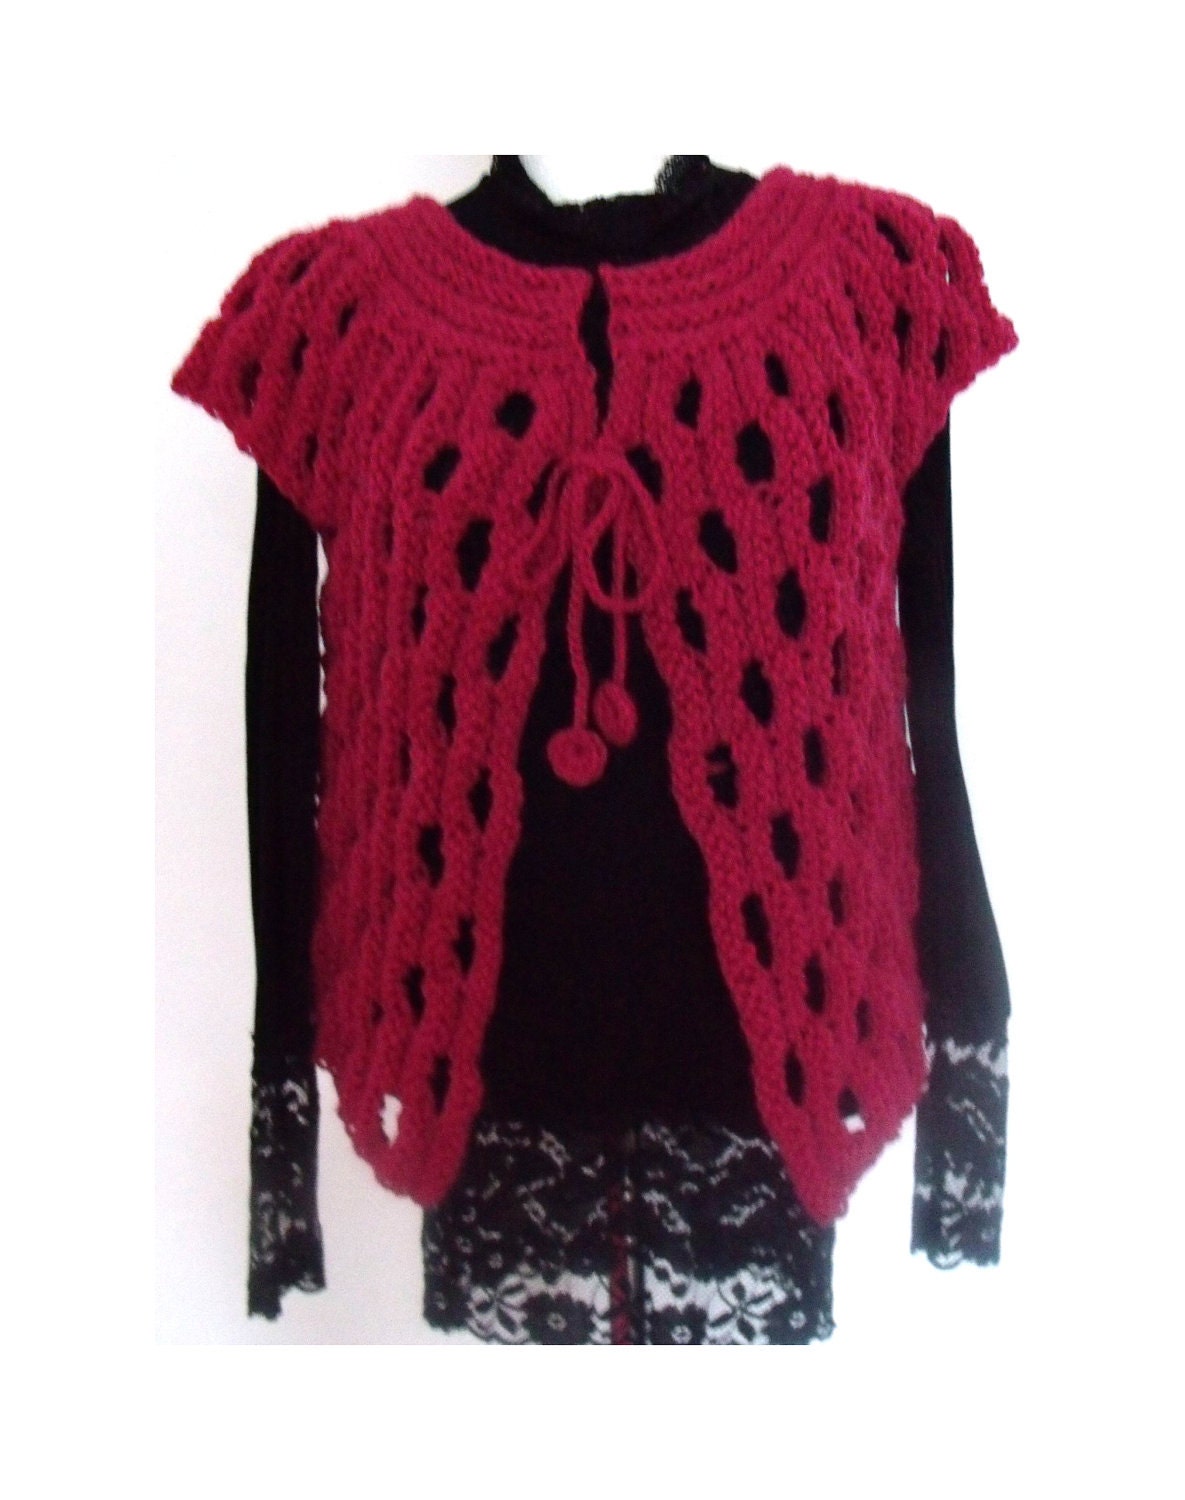 Pink Fuchsia vest shrug bolero wool bulky OOAK hand knitted 4 seasons - MyLaceSpace